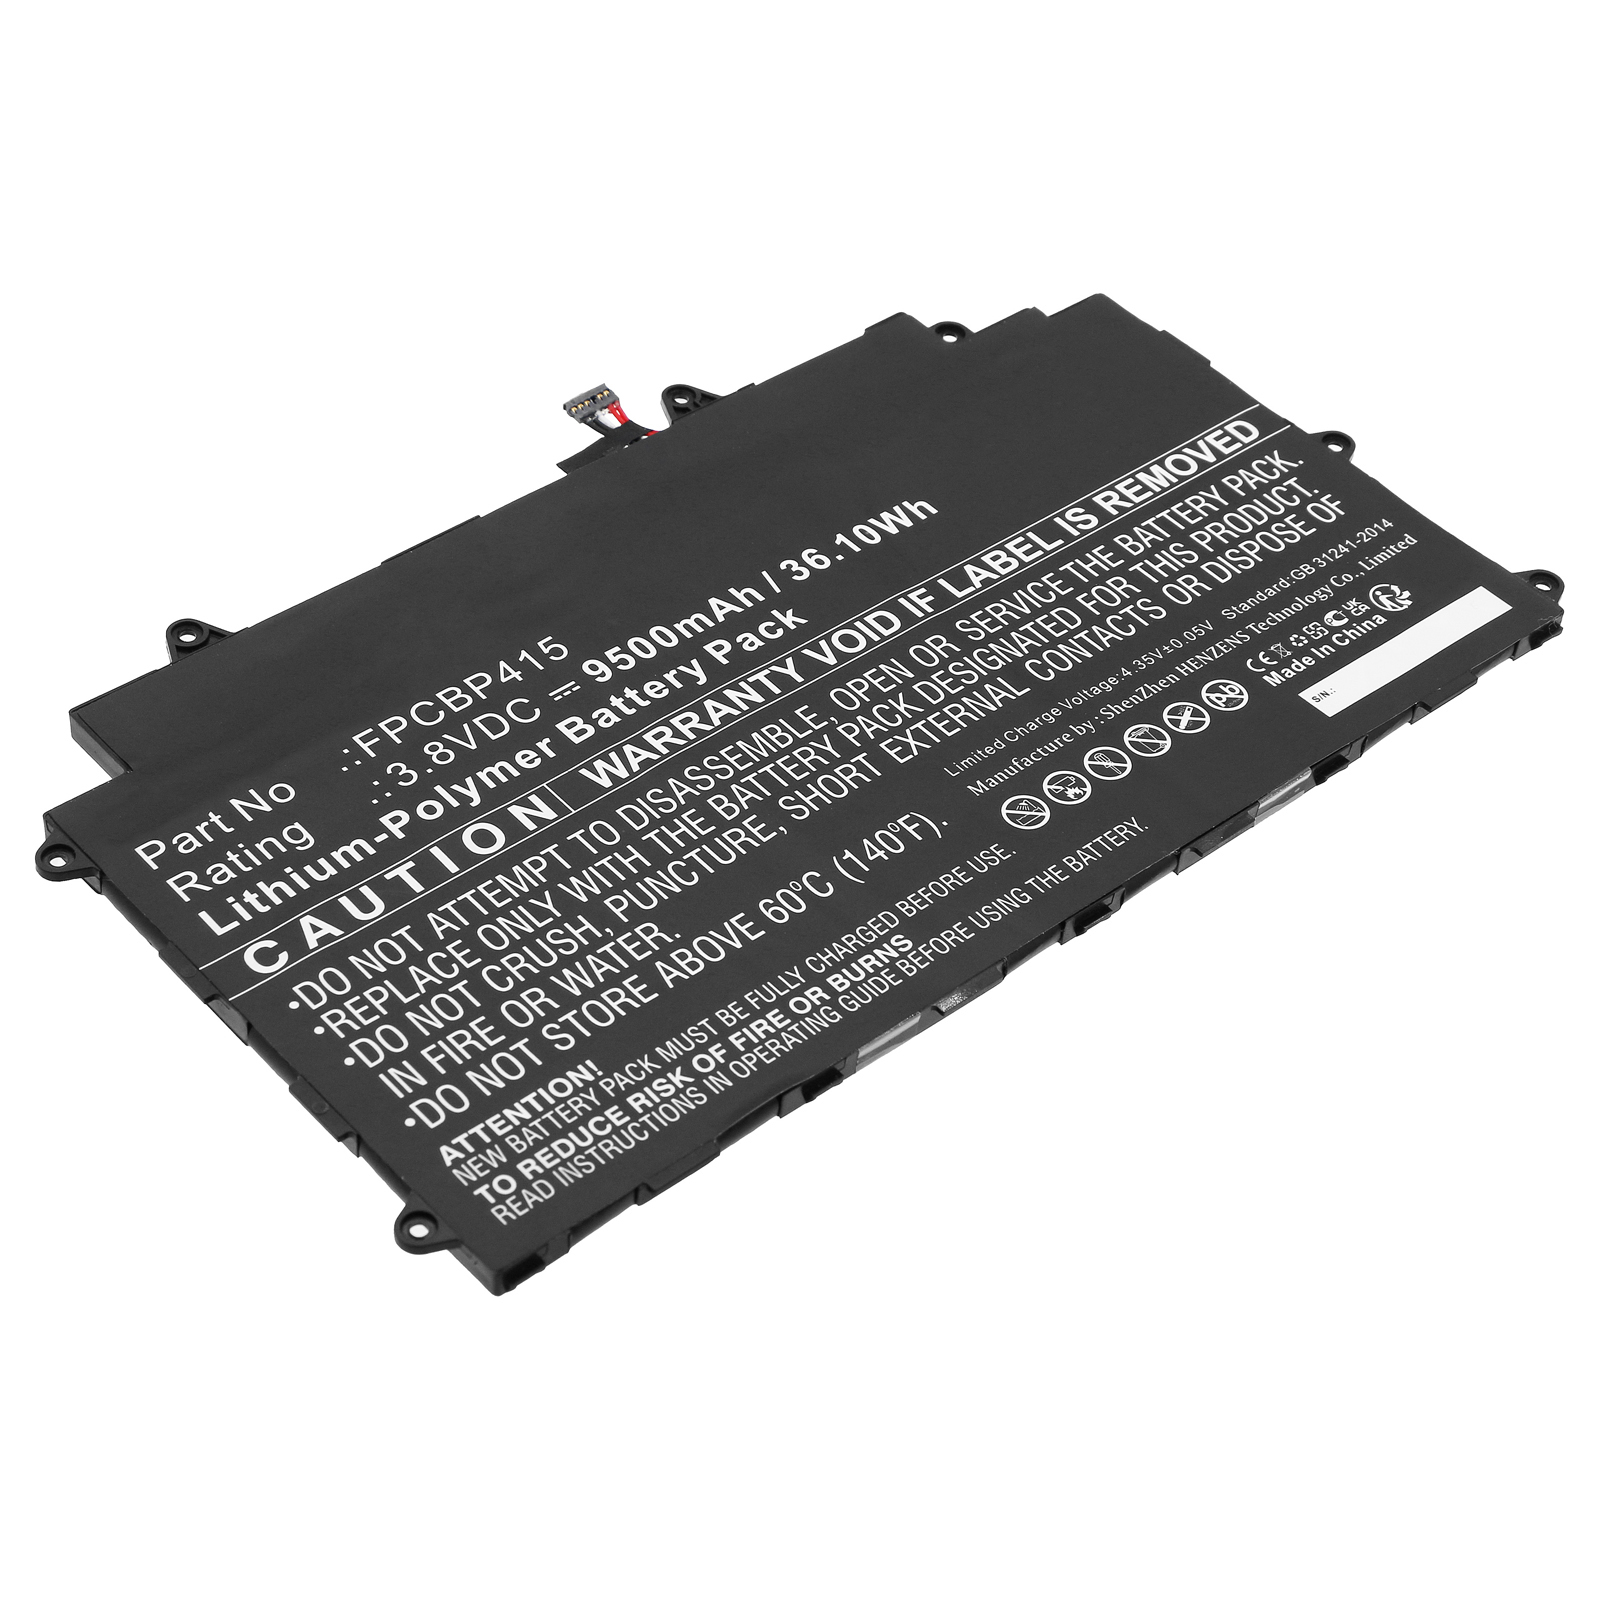 Synergy Digital Laptop Battery, Compatible with Fujitsu CP678530-01 Laptop Battery (Li-Pol, 3.8V, 9500mAh)